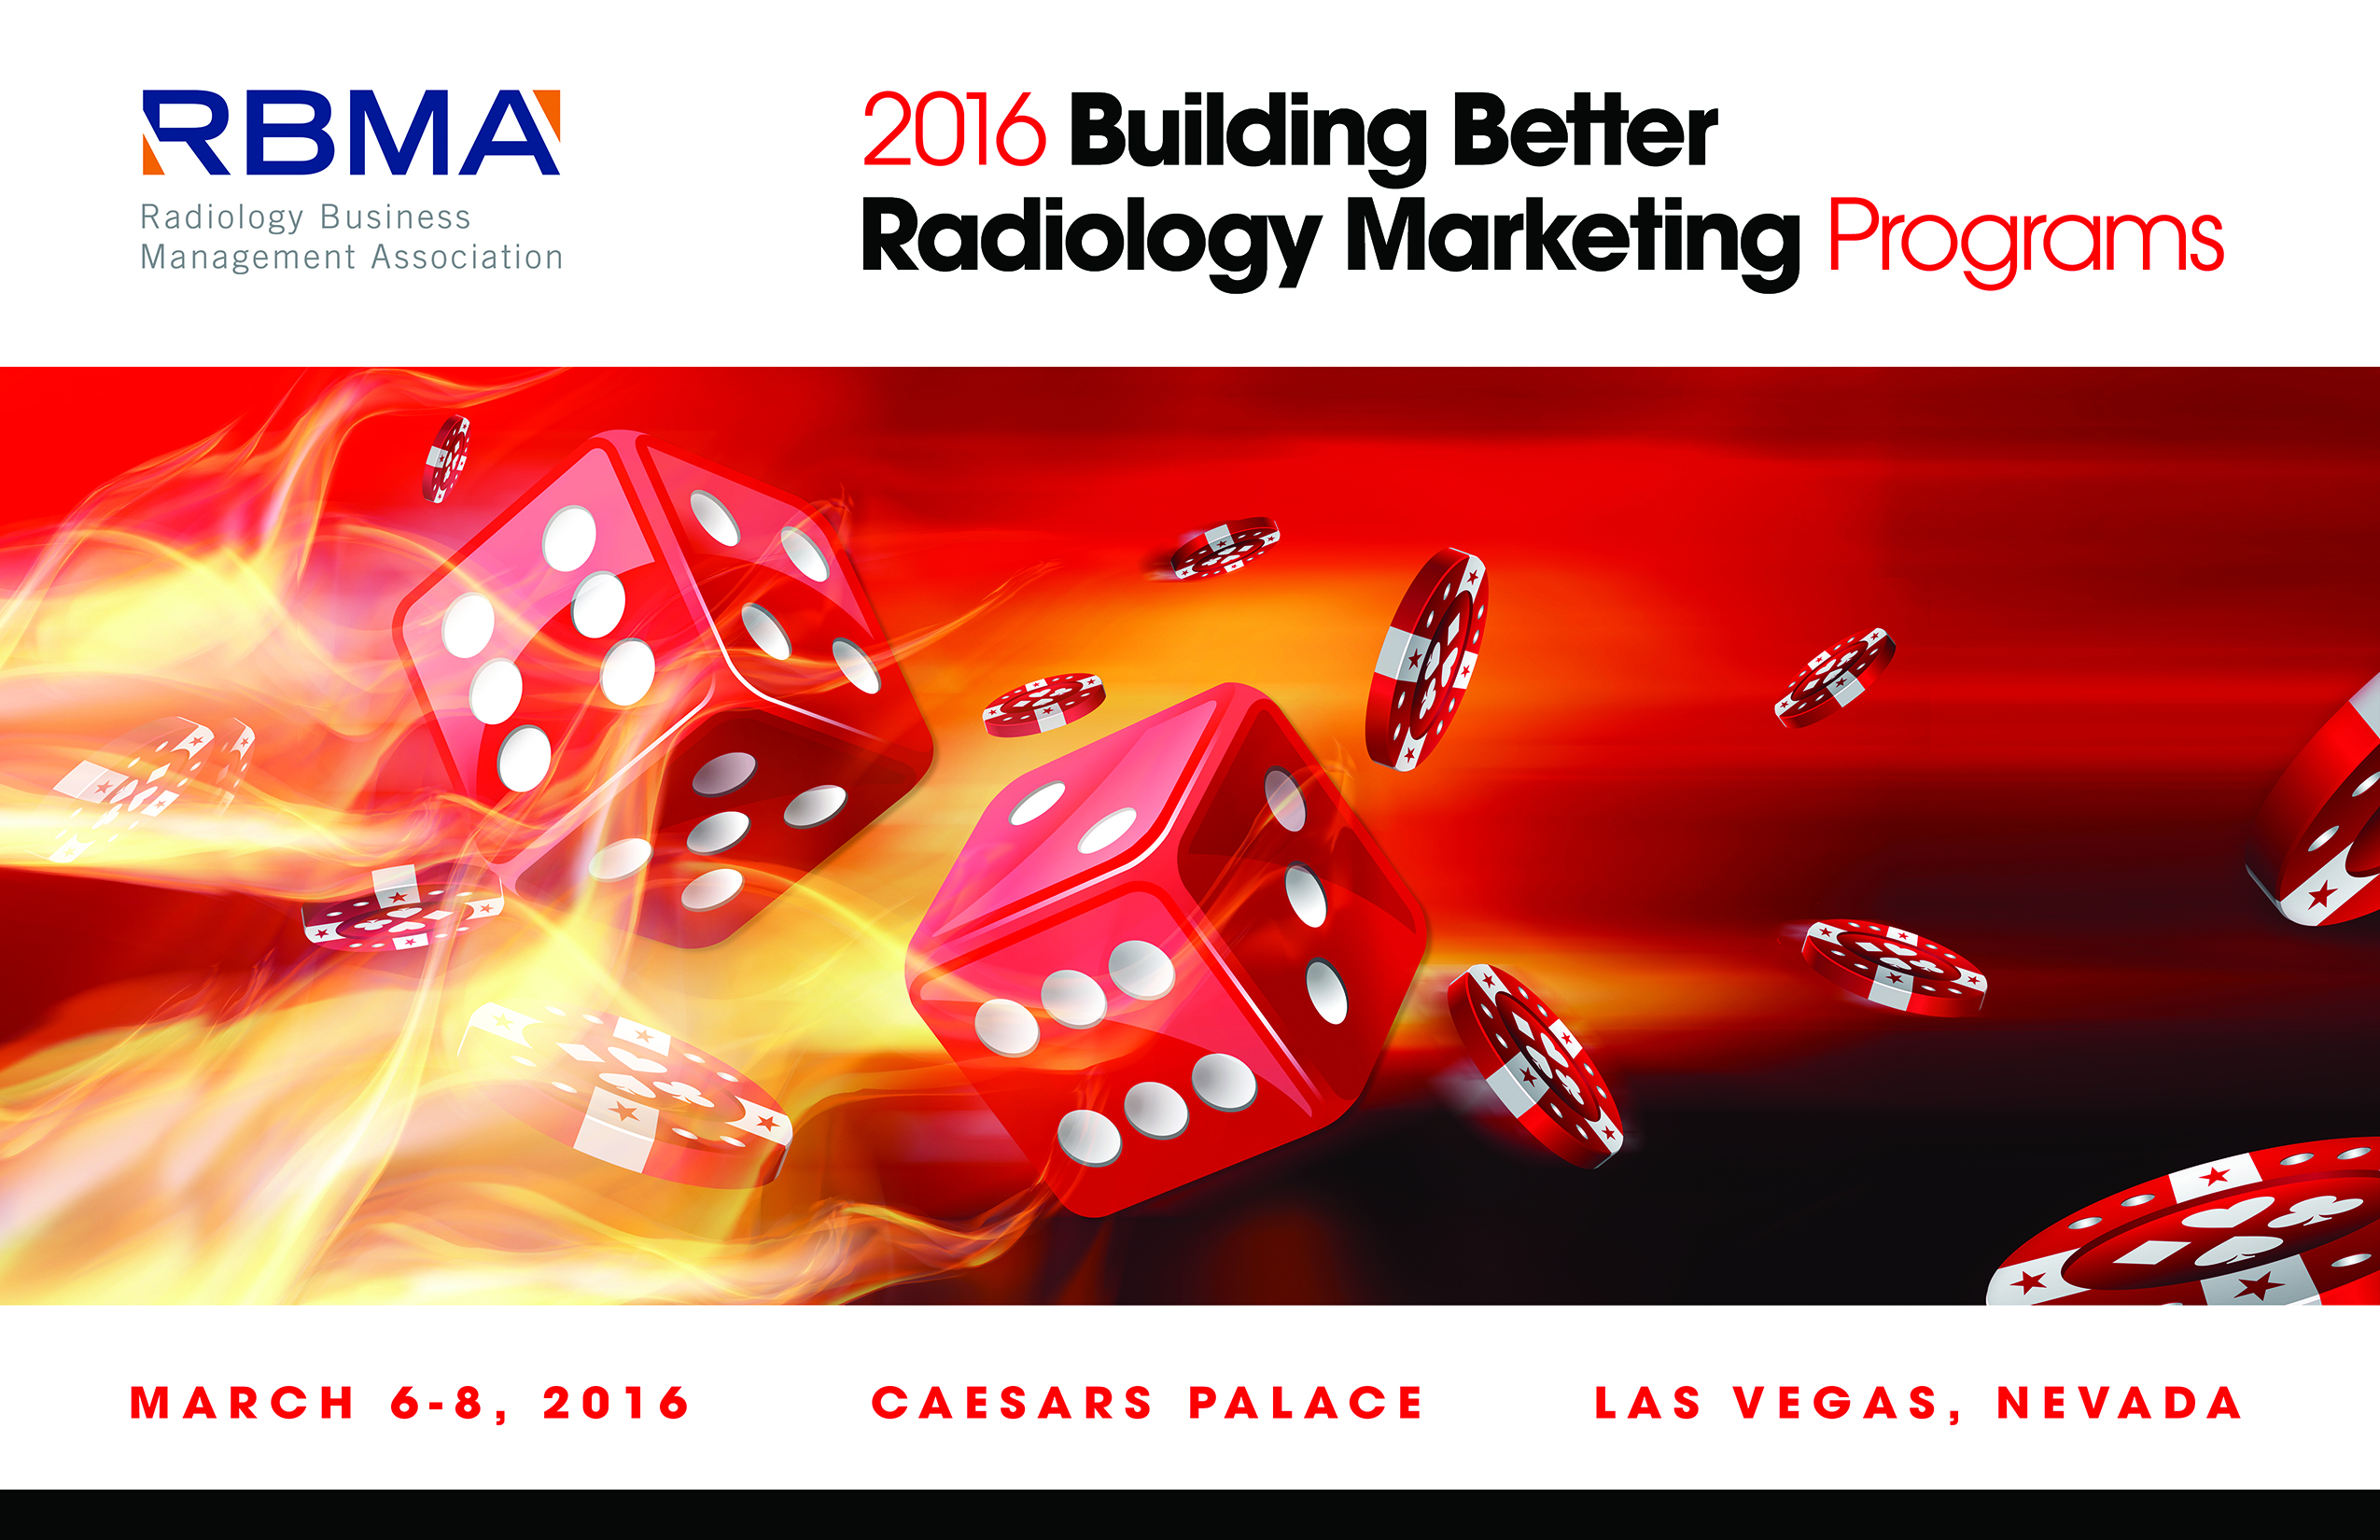 RBMA Building Better Radiology Marketing Programs to Showcase Ideas